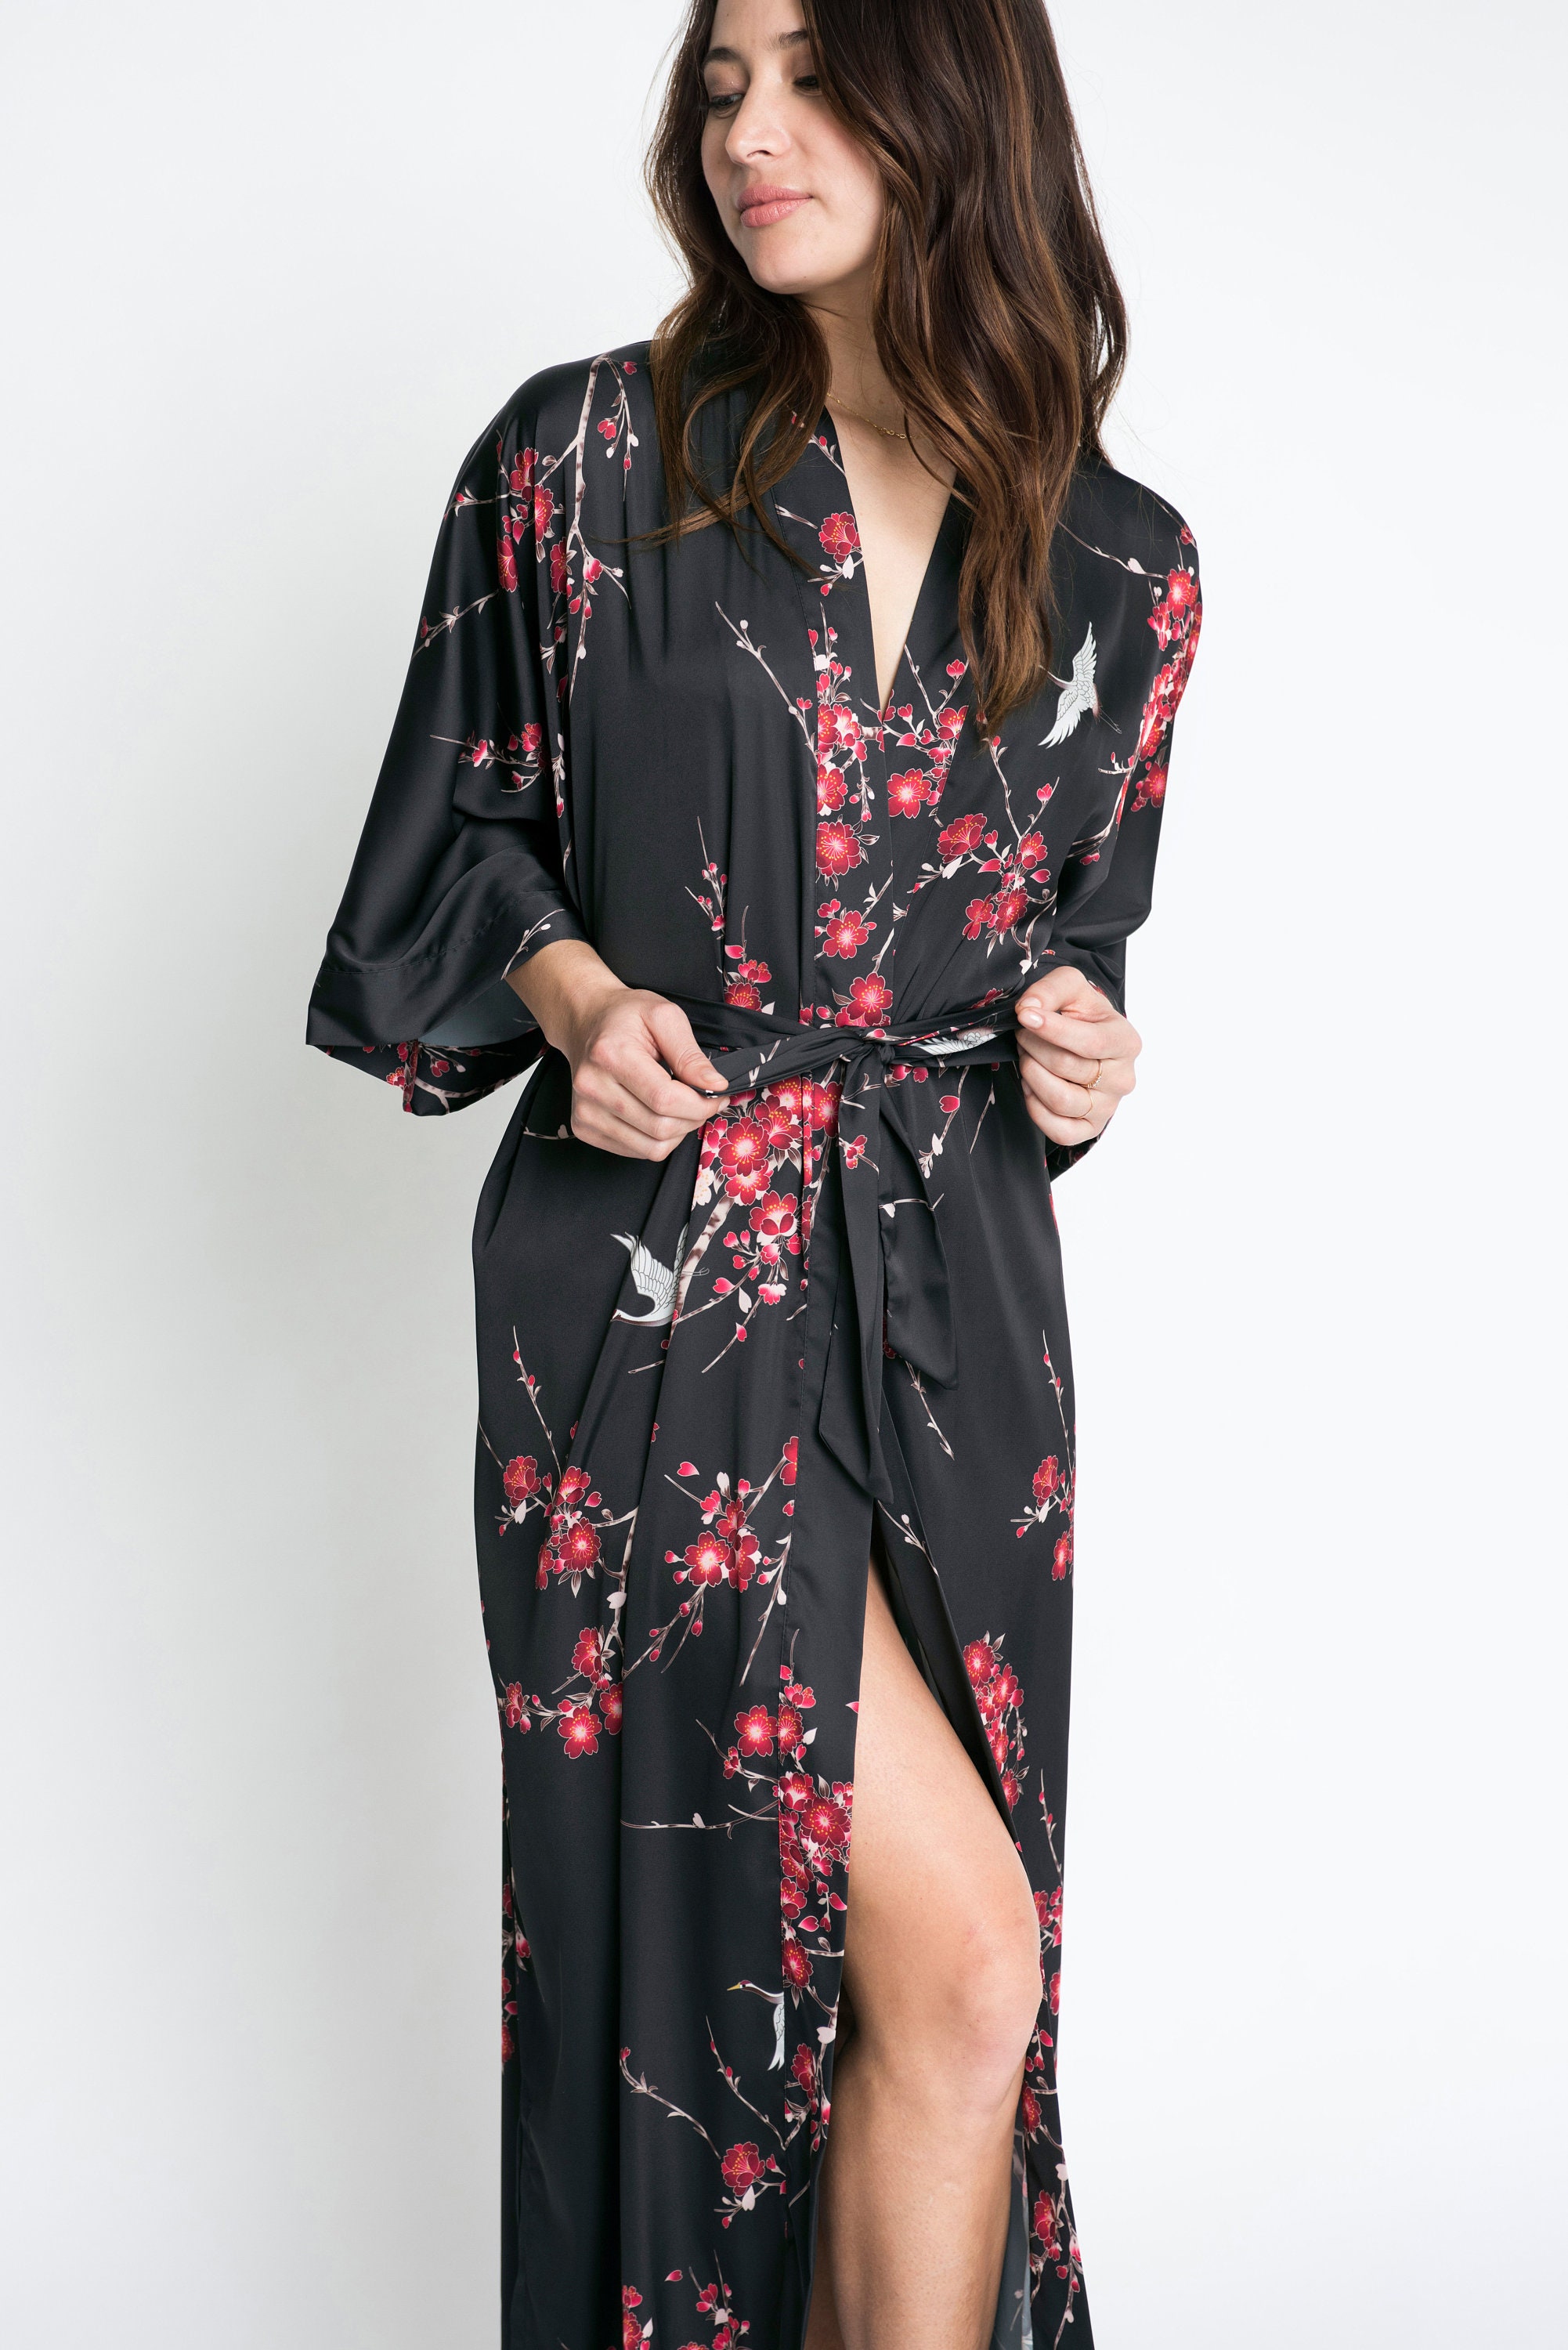 Kimono Robe Cherry Blossom & Crane long KIMONO | Etsy